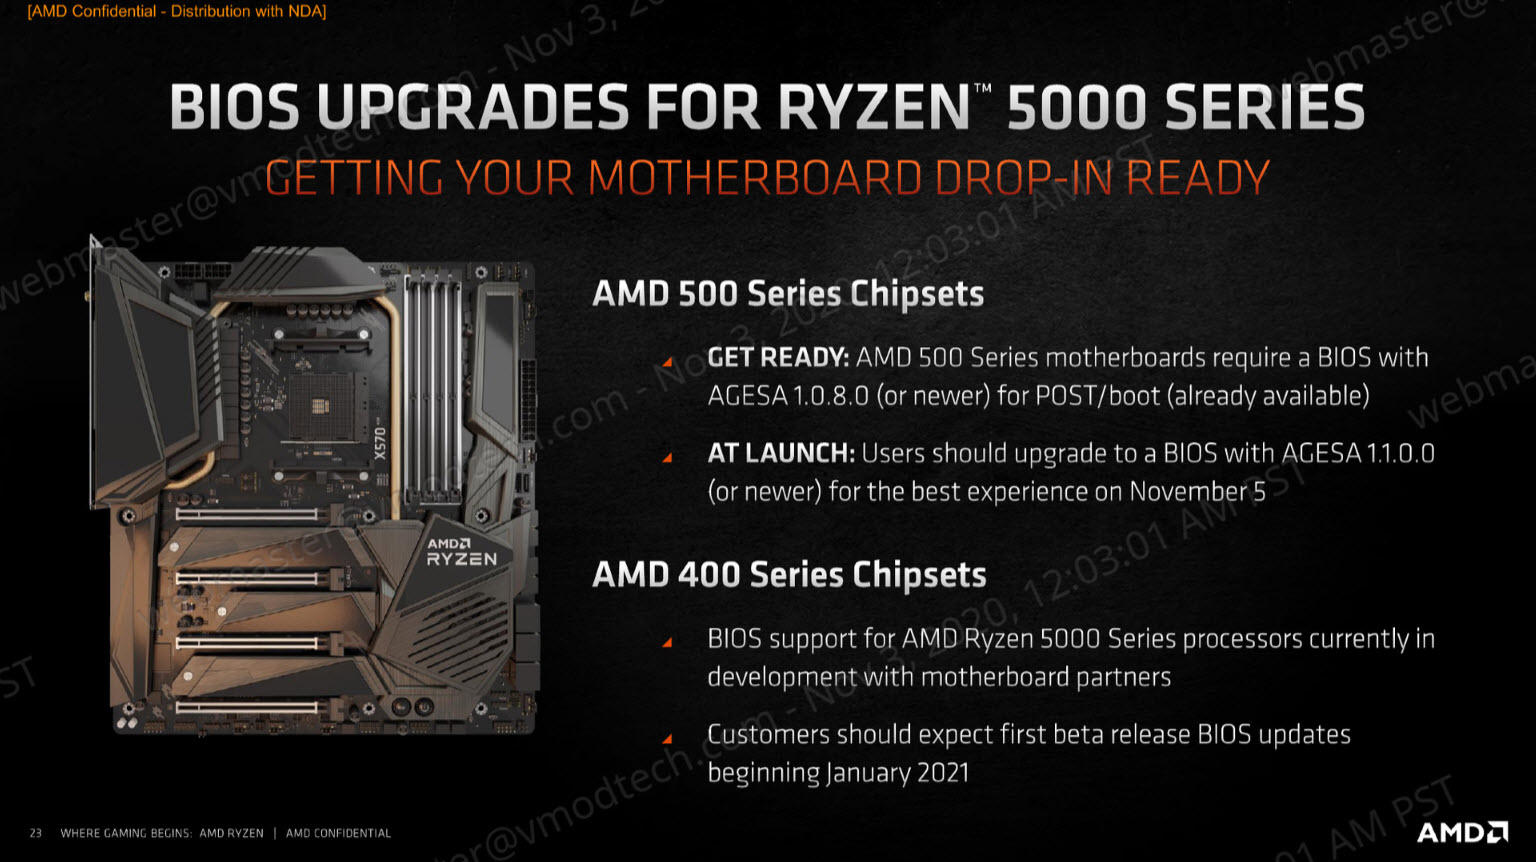 2020 11 03 15 11 39 AMD RYZEN 7 5800X PROCESSOR REVIEW